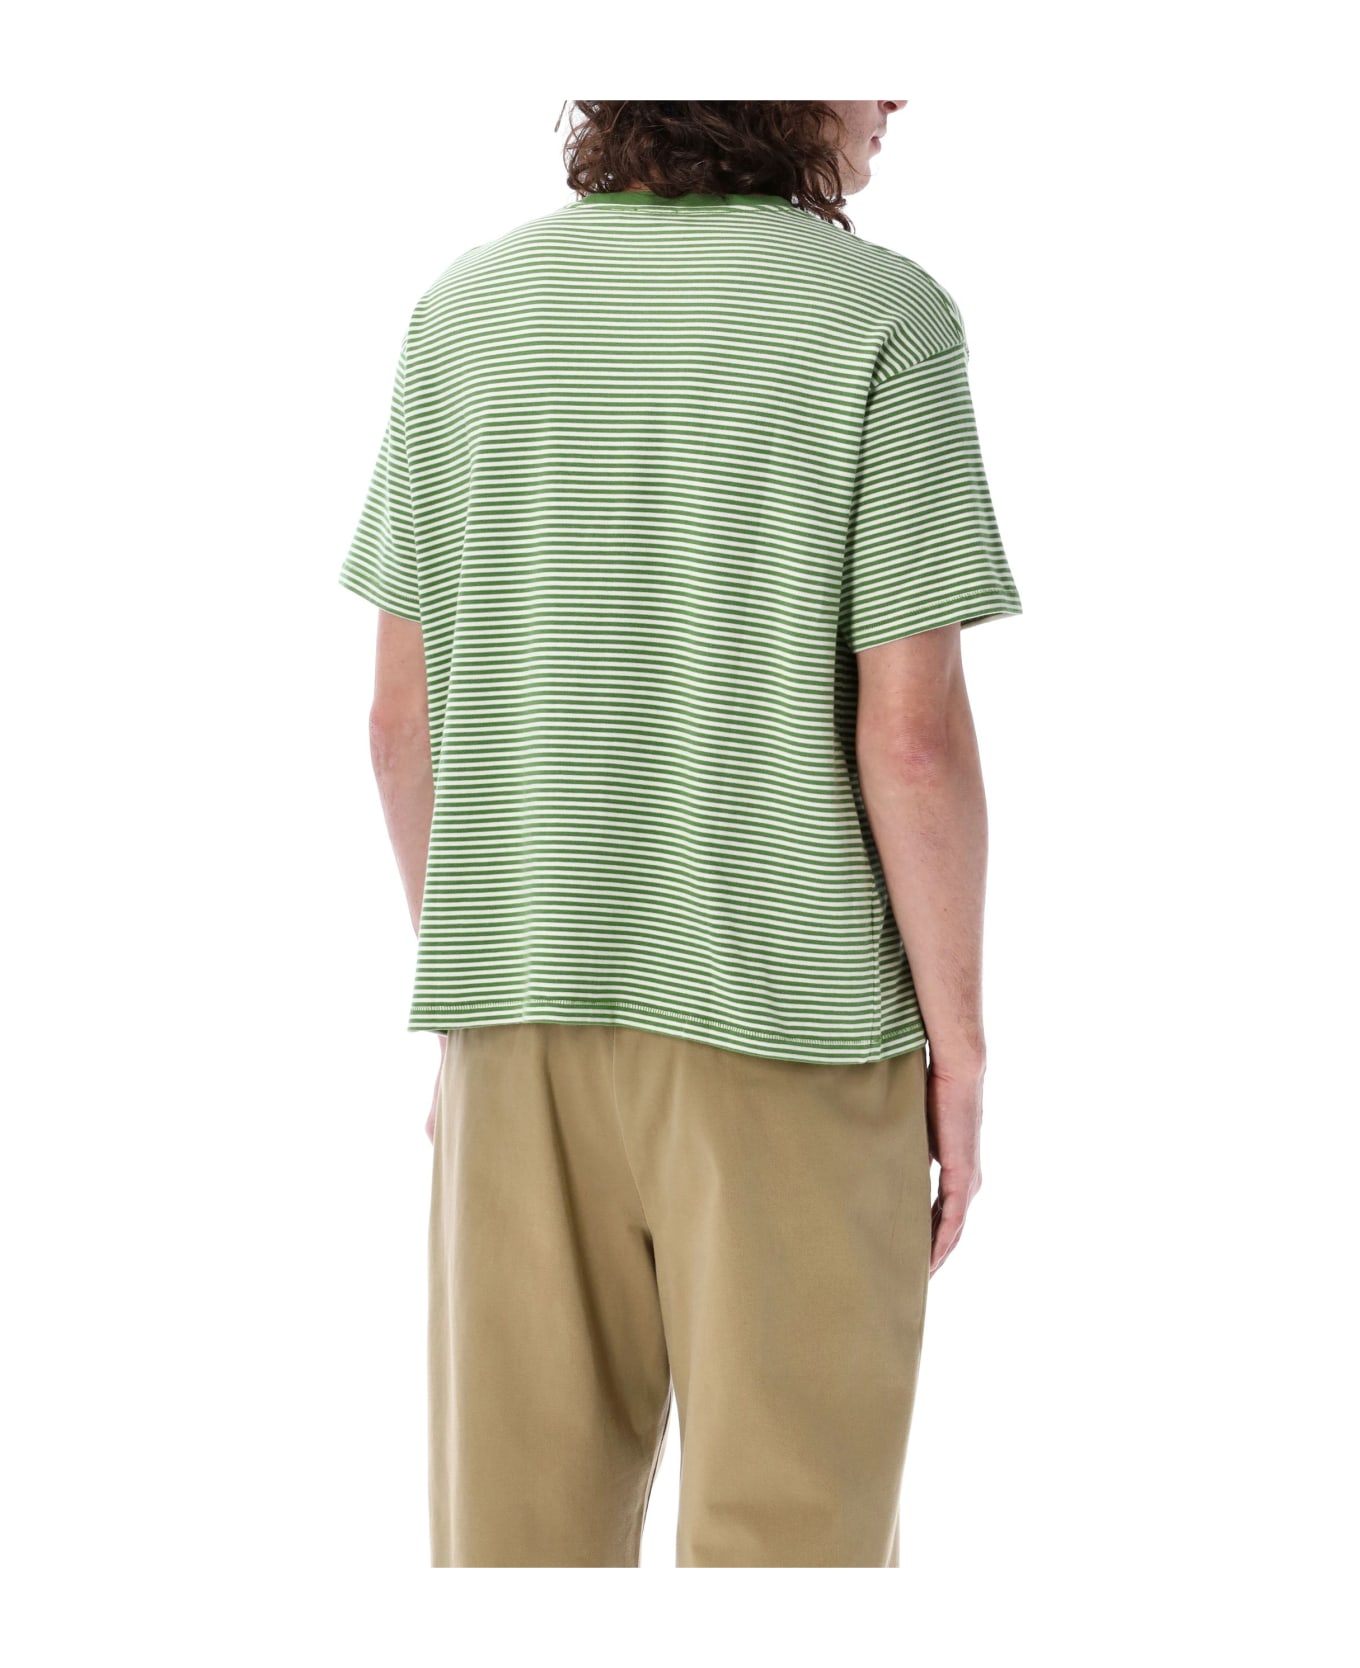 Bode Truro Stripes T-shirt - GREEN CREAM